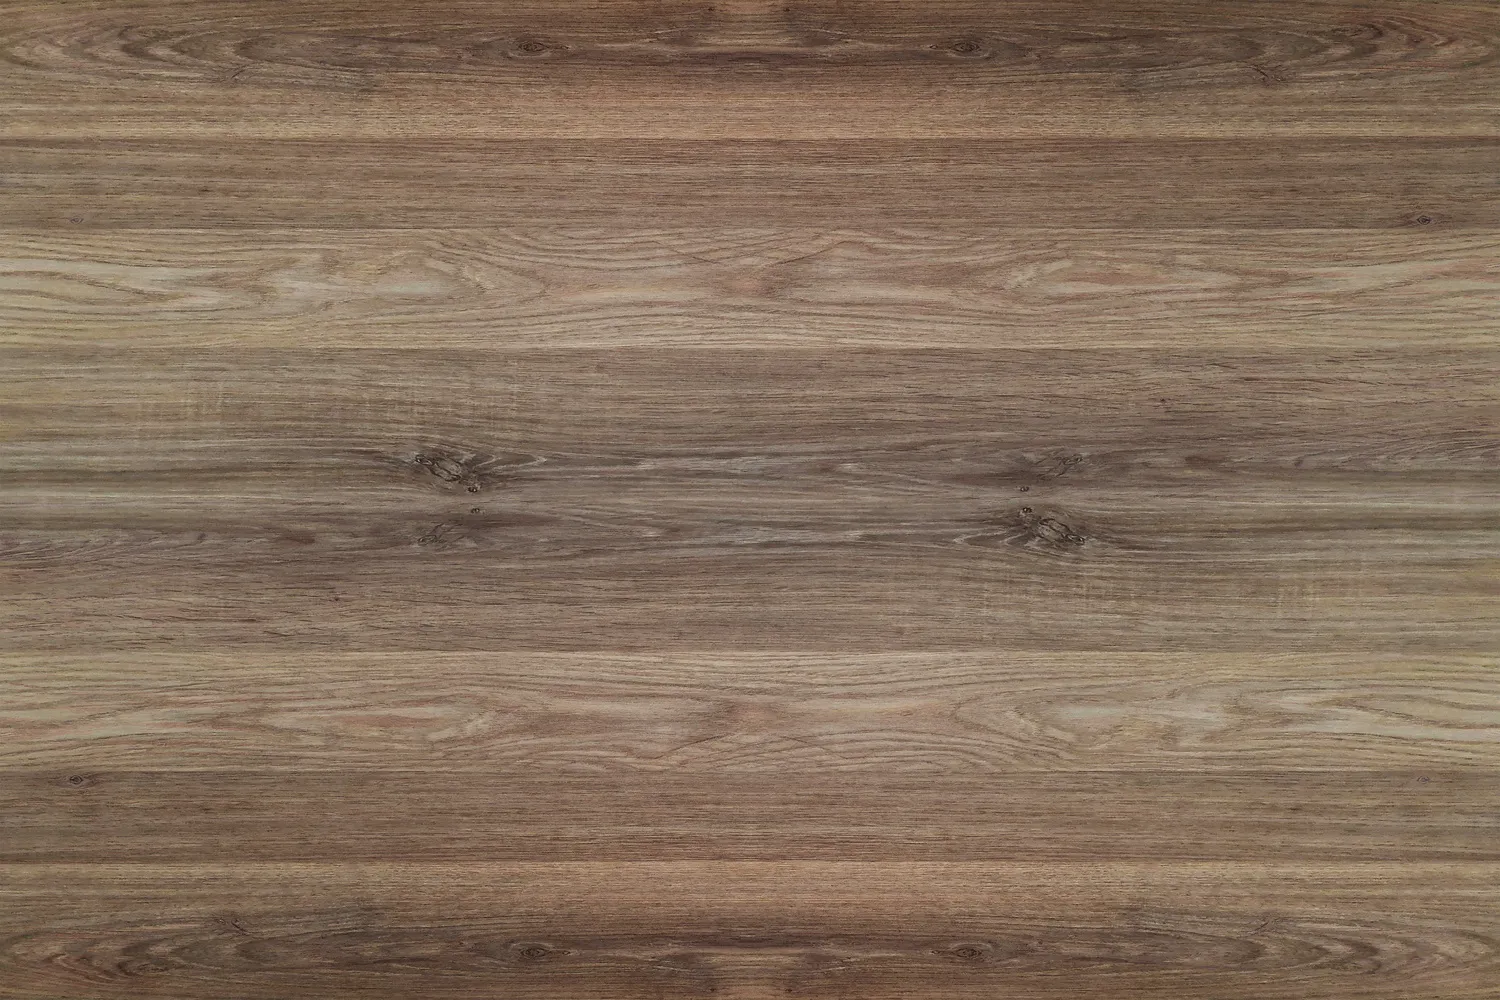 close up to sample of dark brown vinyl flooring